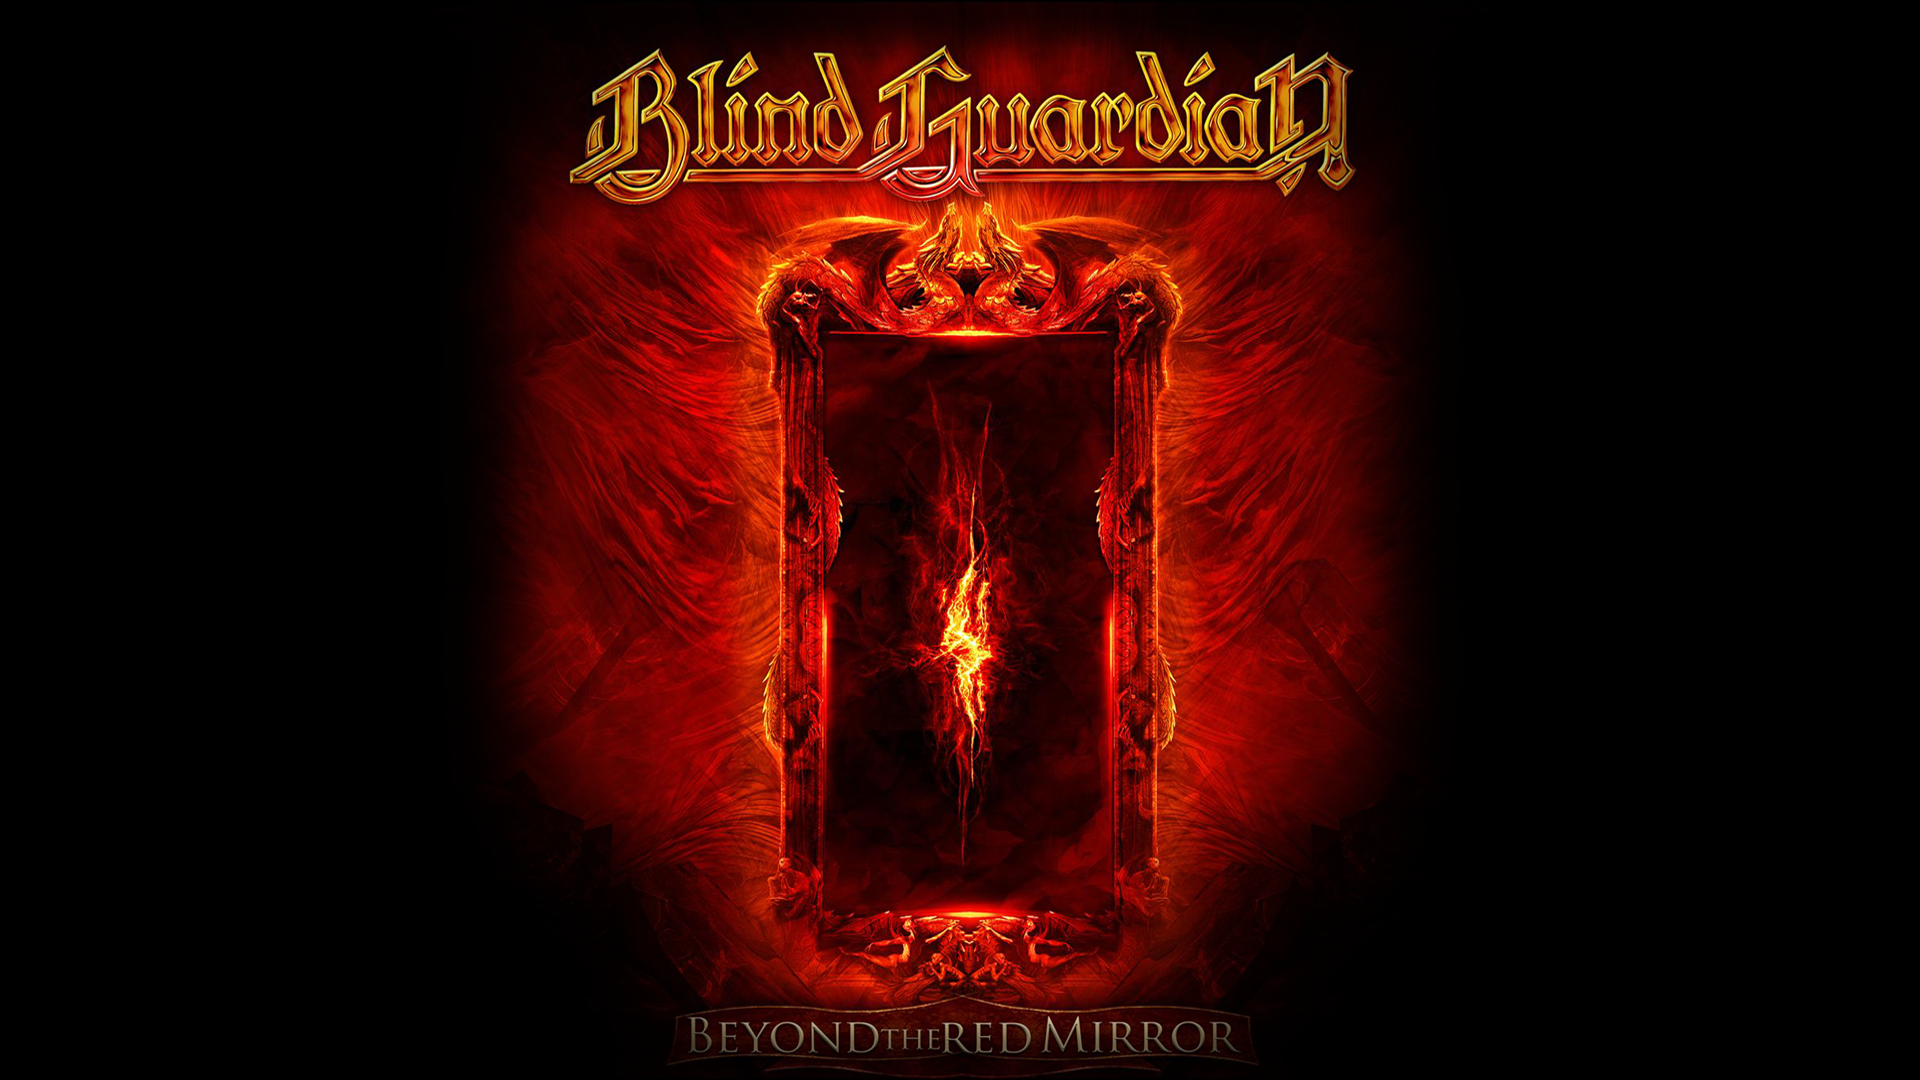 General 1920x1080 Blind Guardian fan art band metal music album covers power metal metal band music